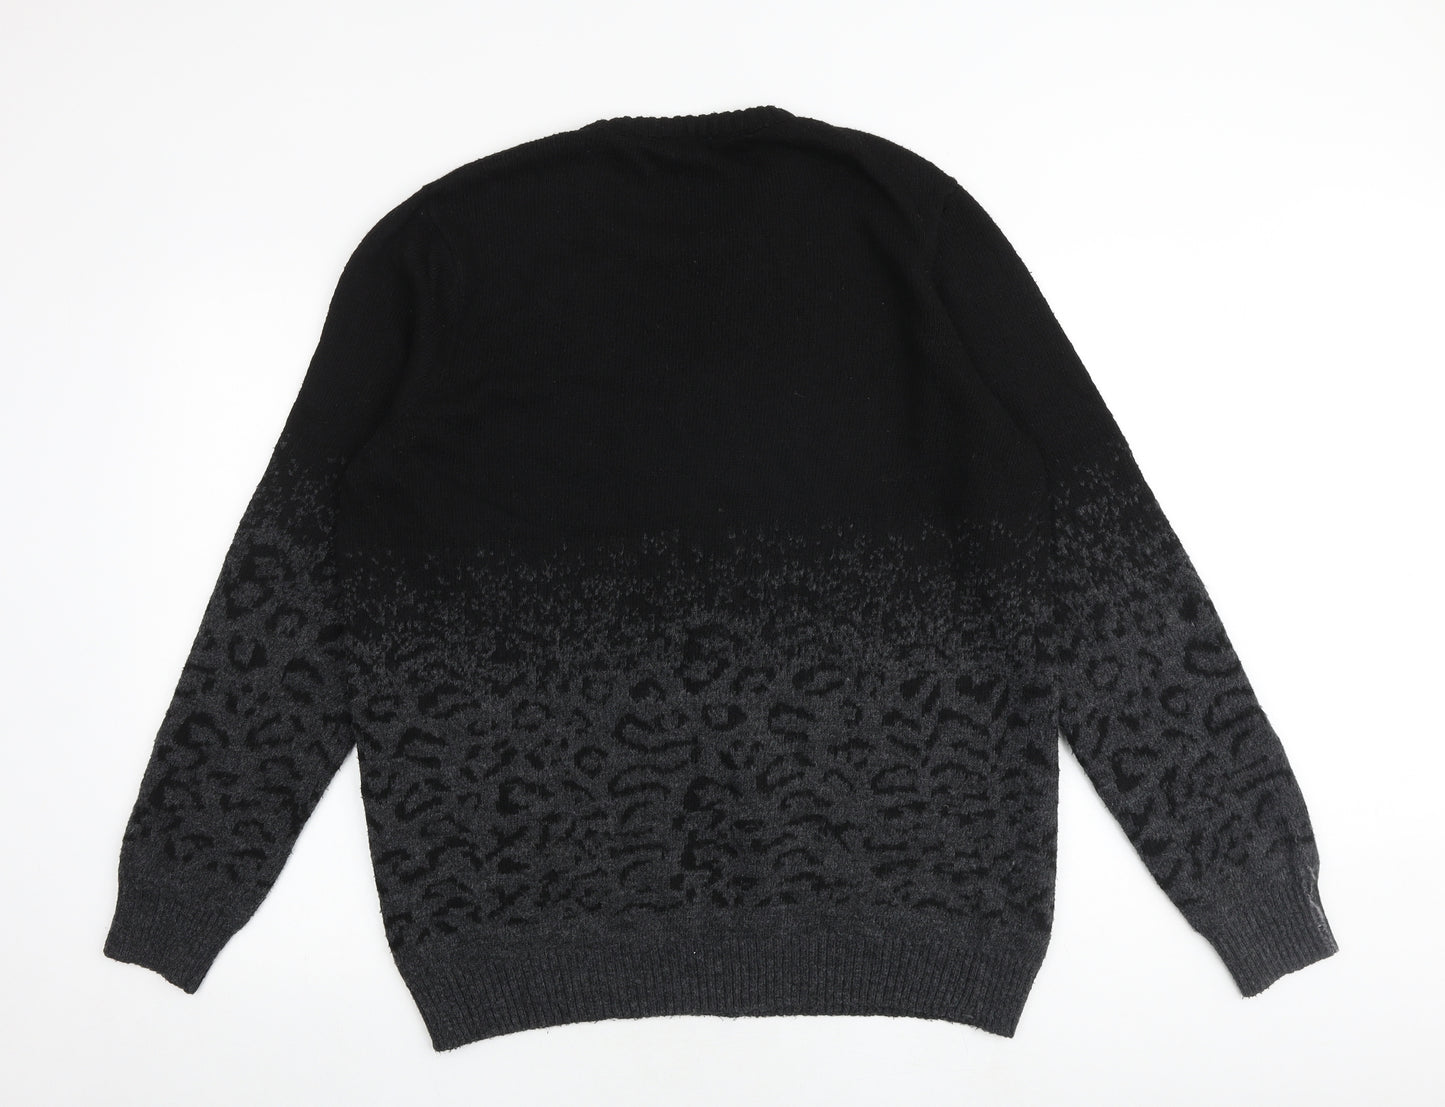 River Island Womens Black Round Neck Animal Print Acrylic Pullover Jumper Size XL - Leopard Print